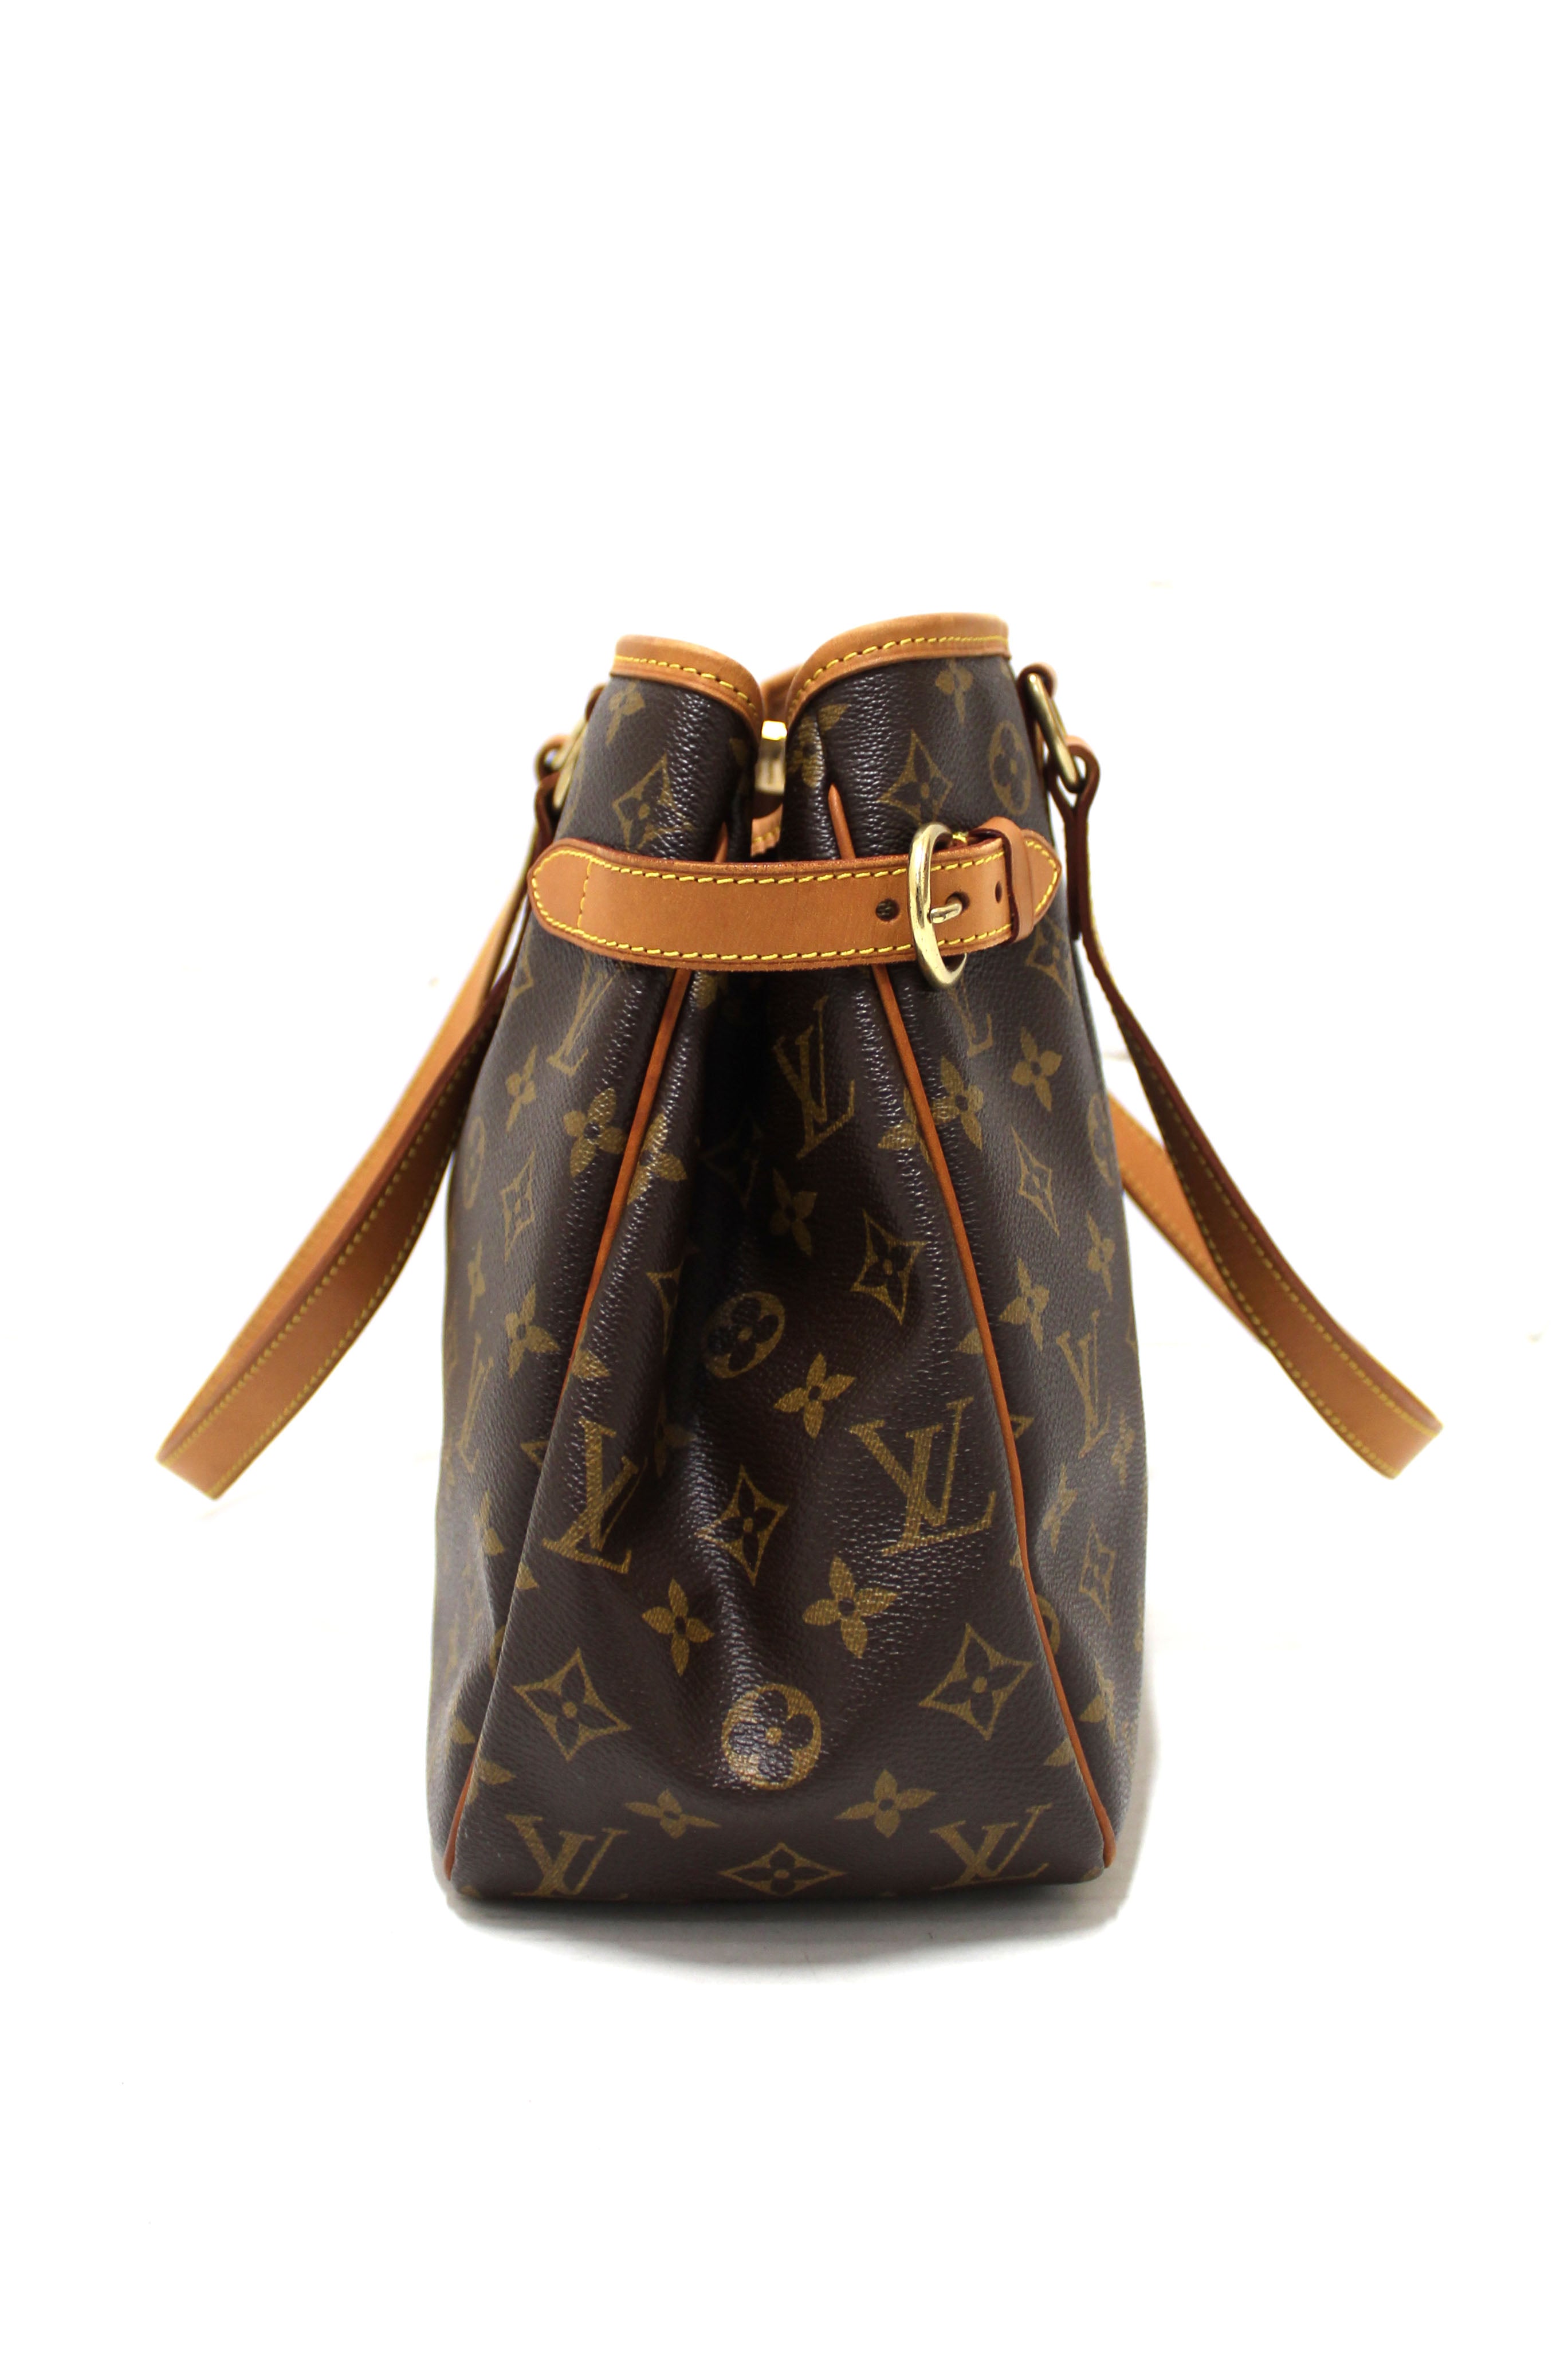 Louis Vuitton Batignolles Tote Bags